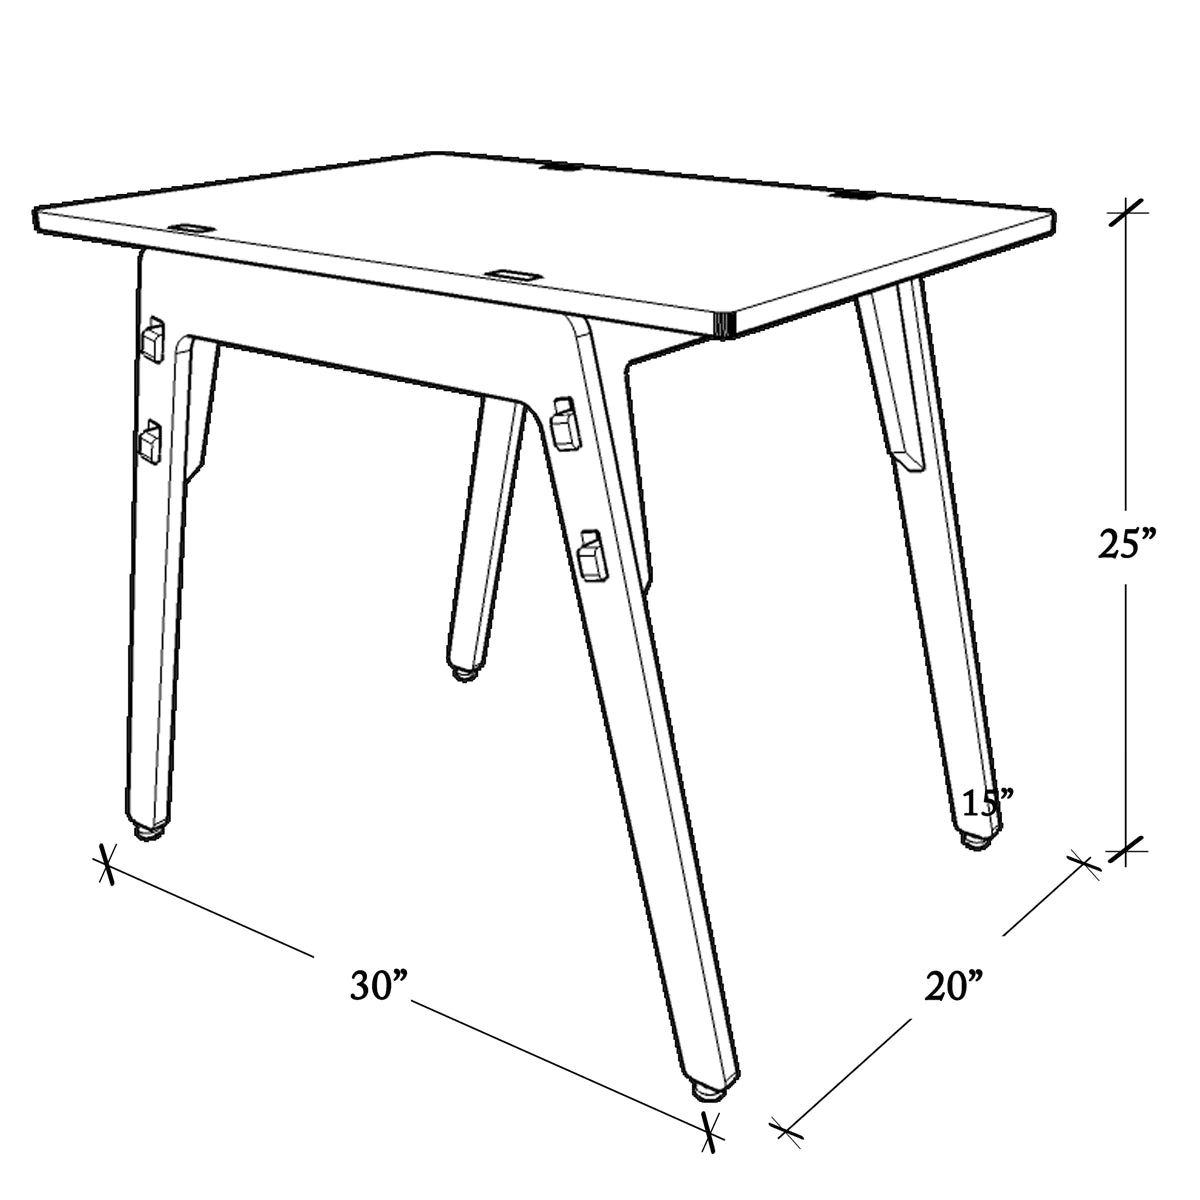 Buy Black Kiwi Wooden Table - Pink - Dimensions - SkilloToys.com